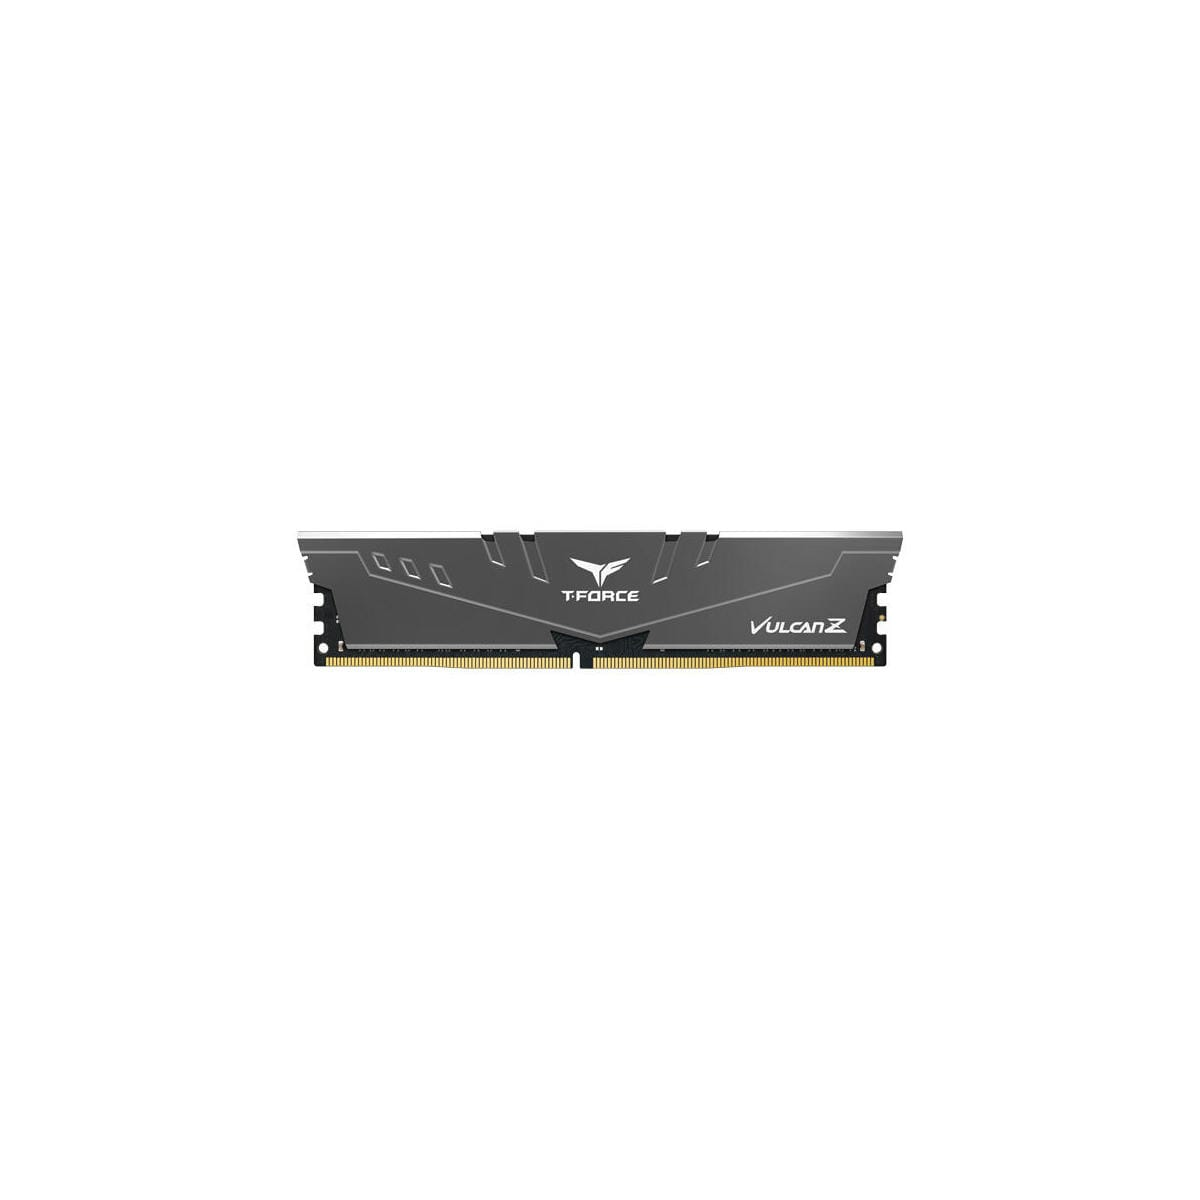 OTROS 2x8GB, grey GB Speicher-Kit series, 1.35V, DDR4 Z Vulcan 16